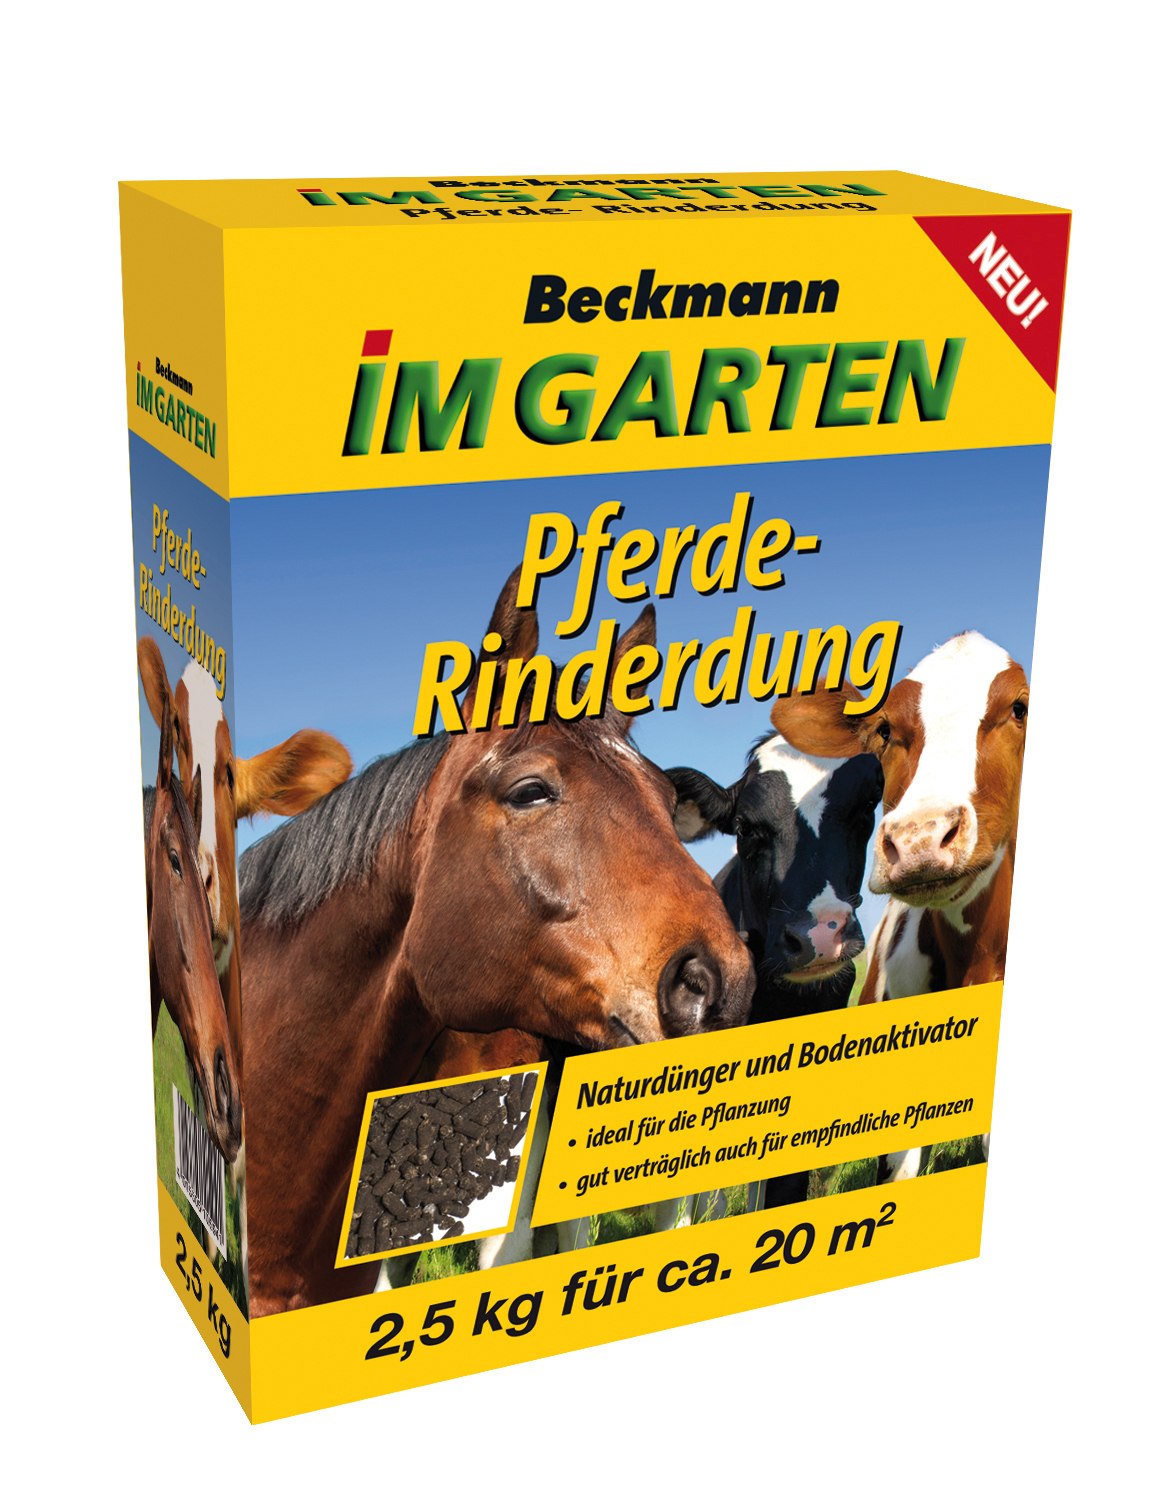 Beckmann & Brehm Pferde-Rinderdung pelletiert 2,5kg